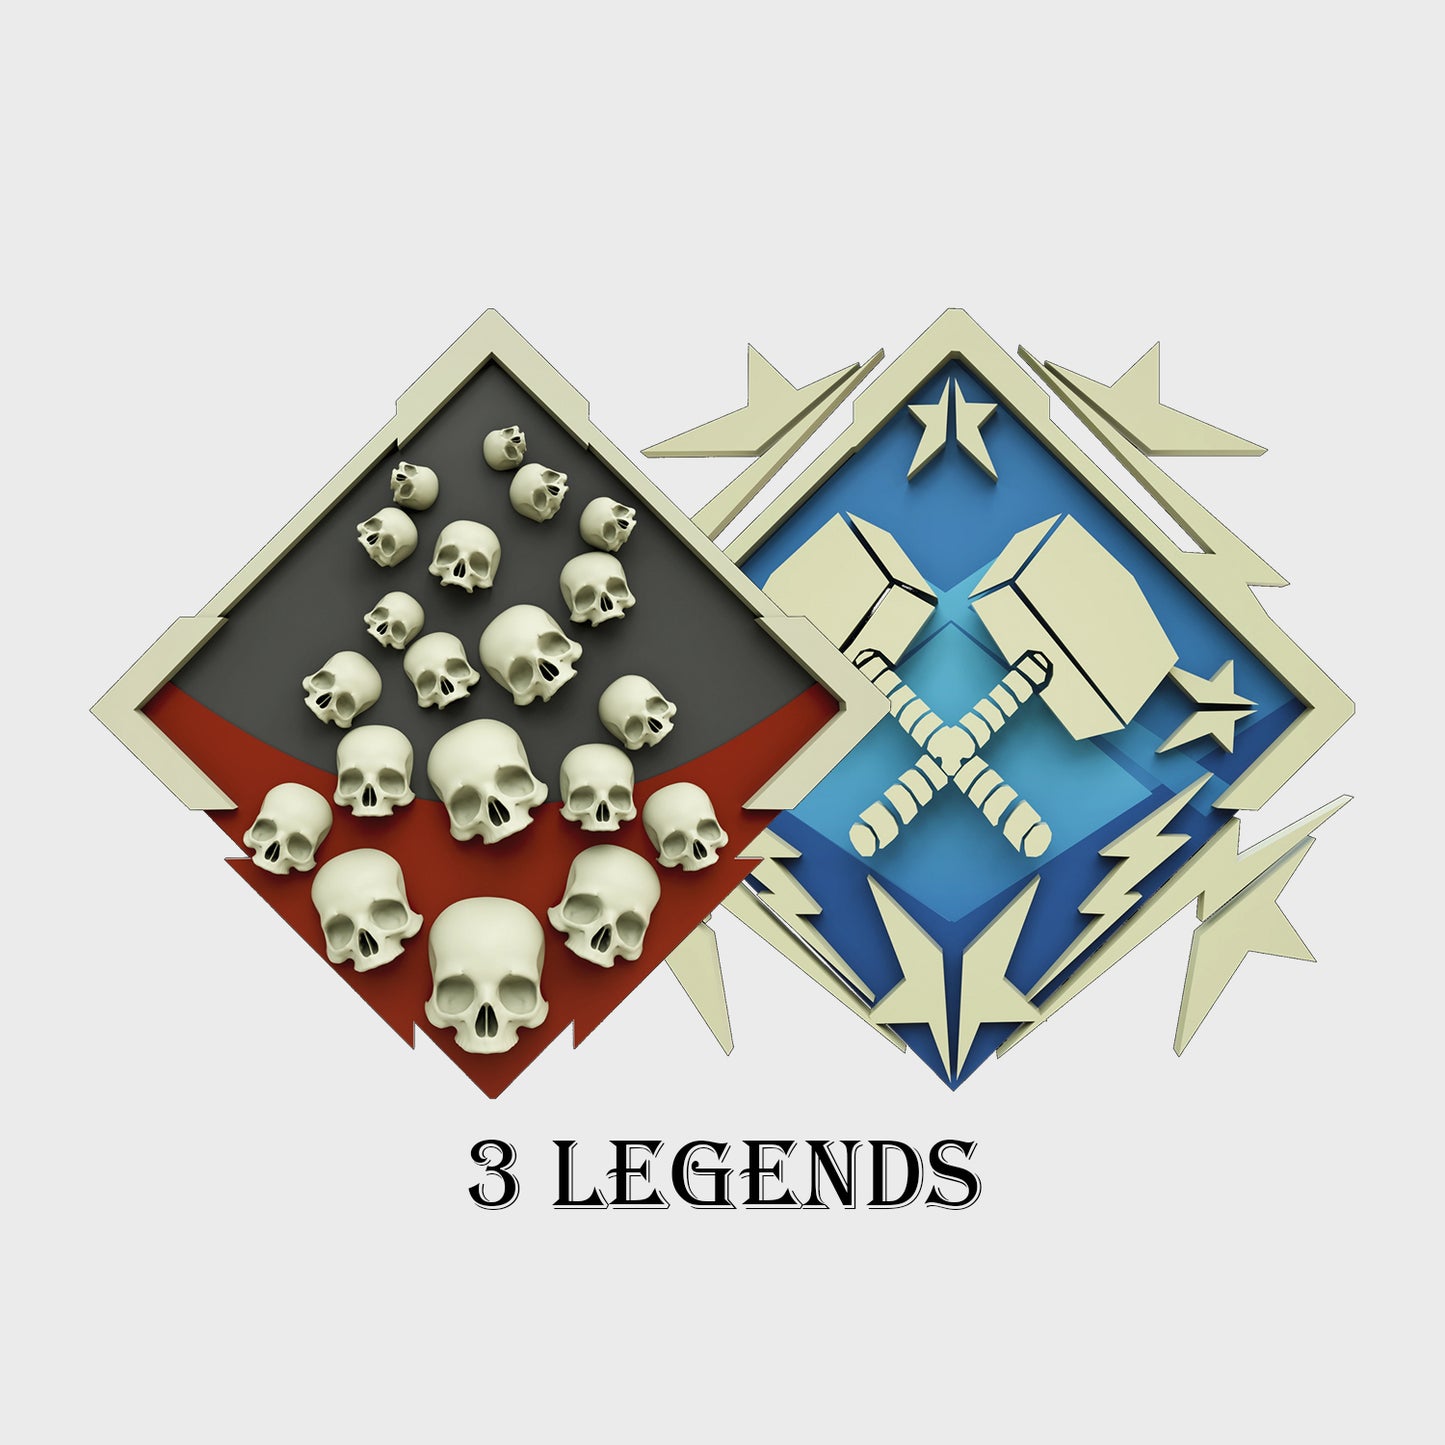 20 Kill + 4k Damage - 3 Legends